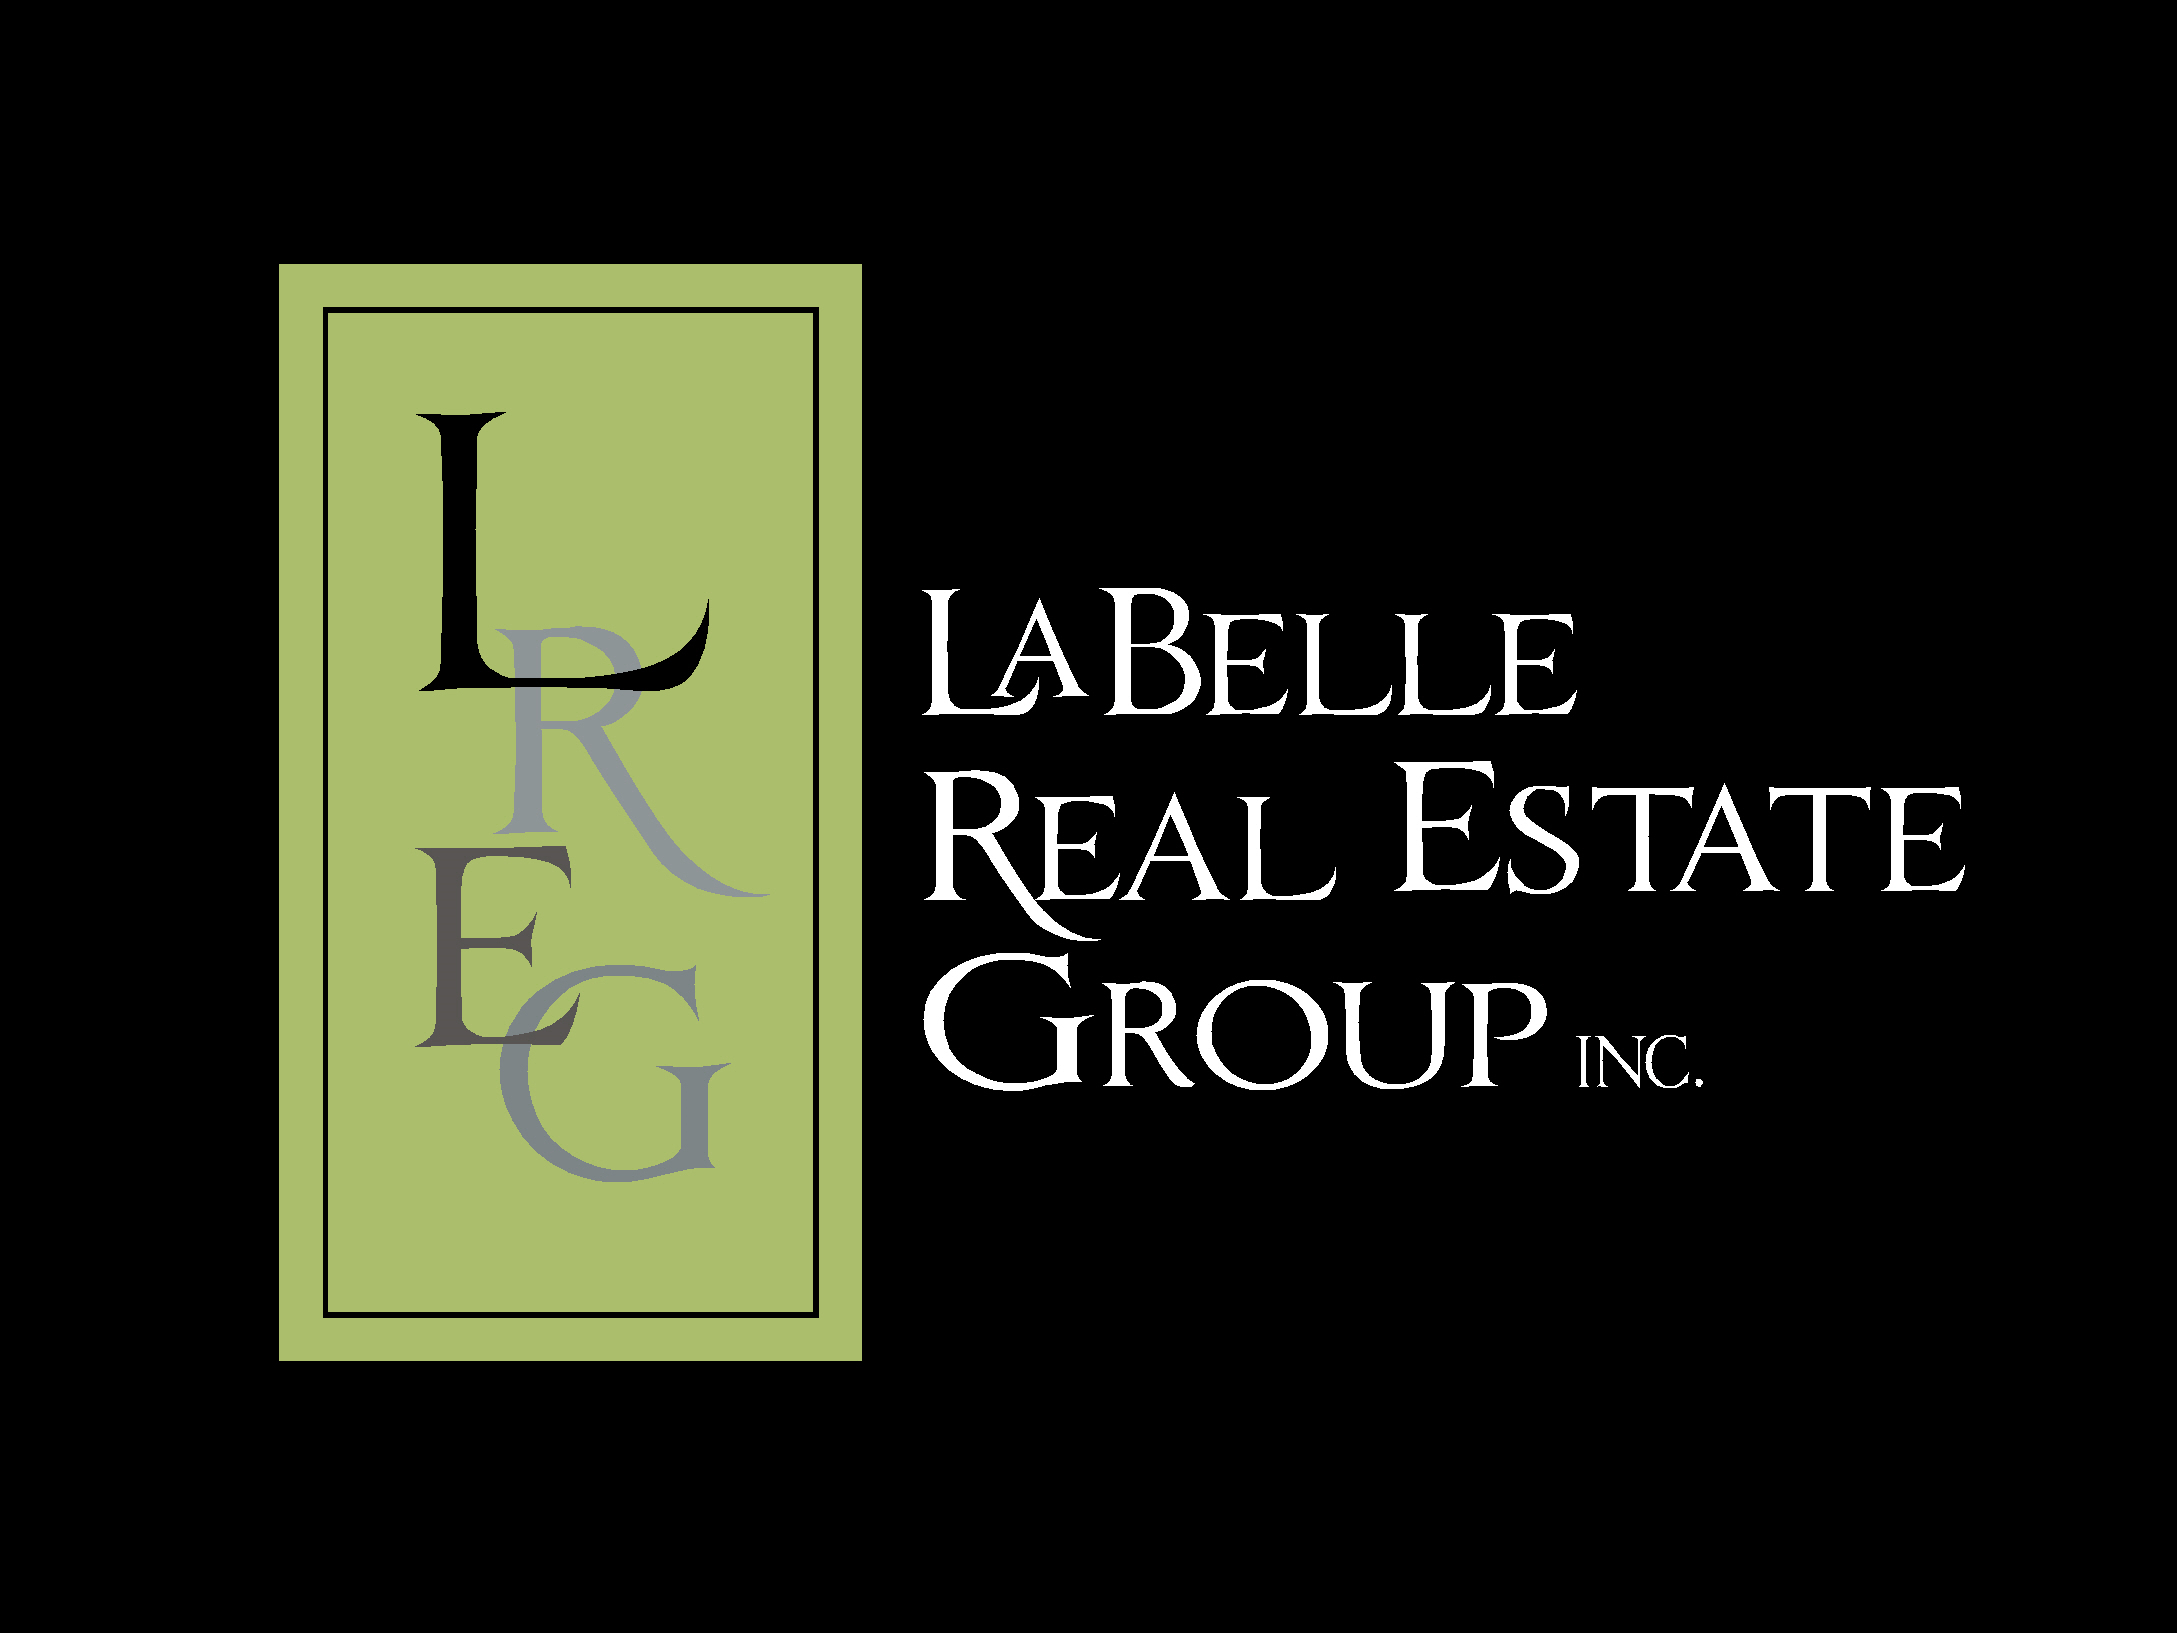 LaBelle Real Estate Group logo